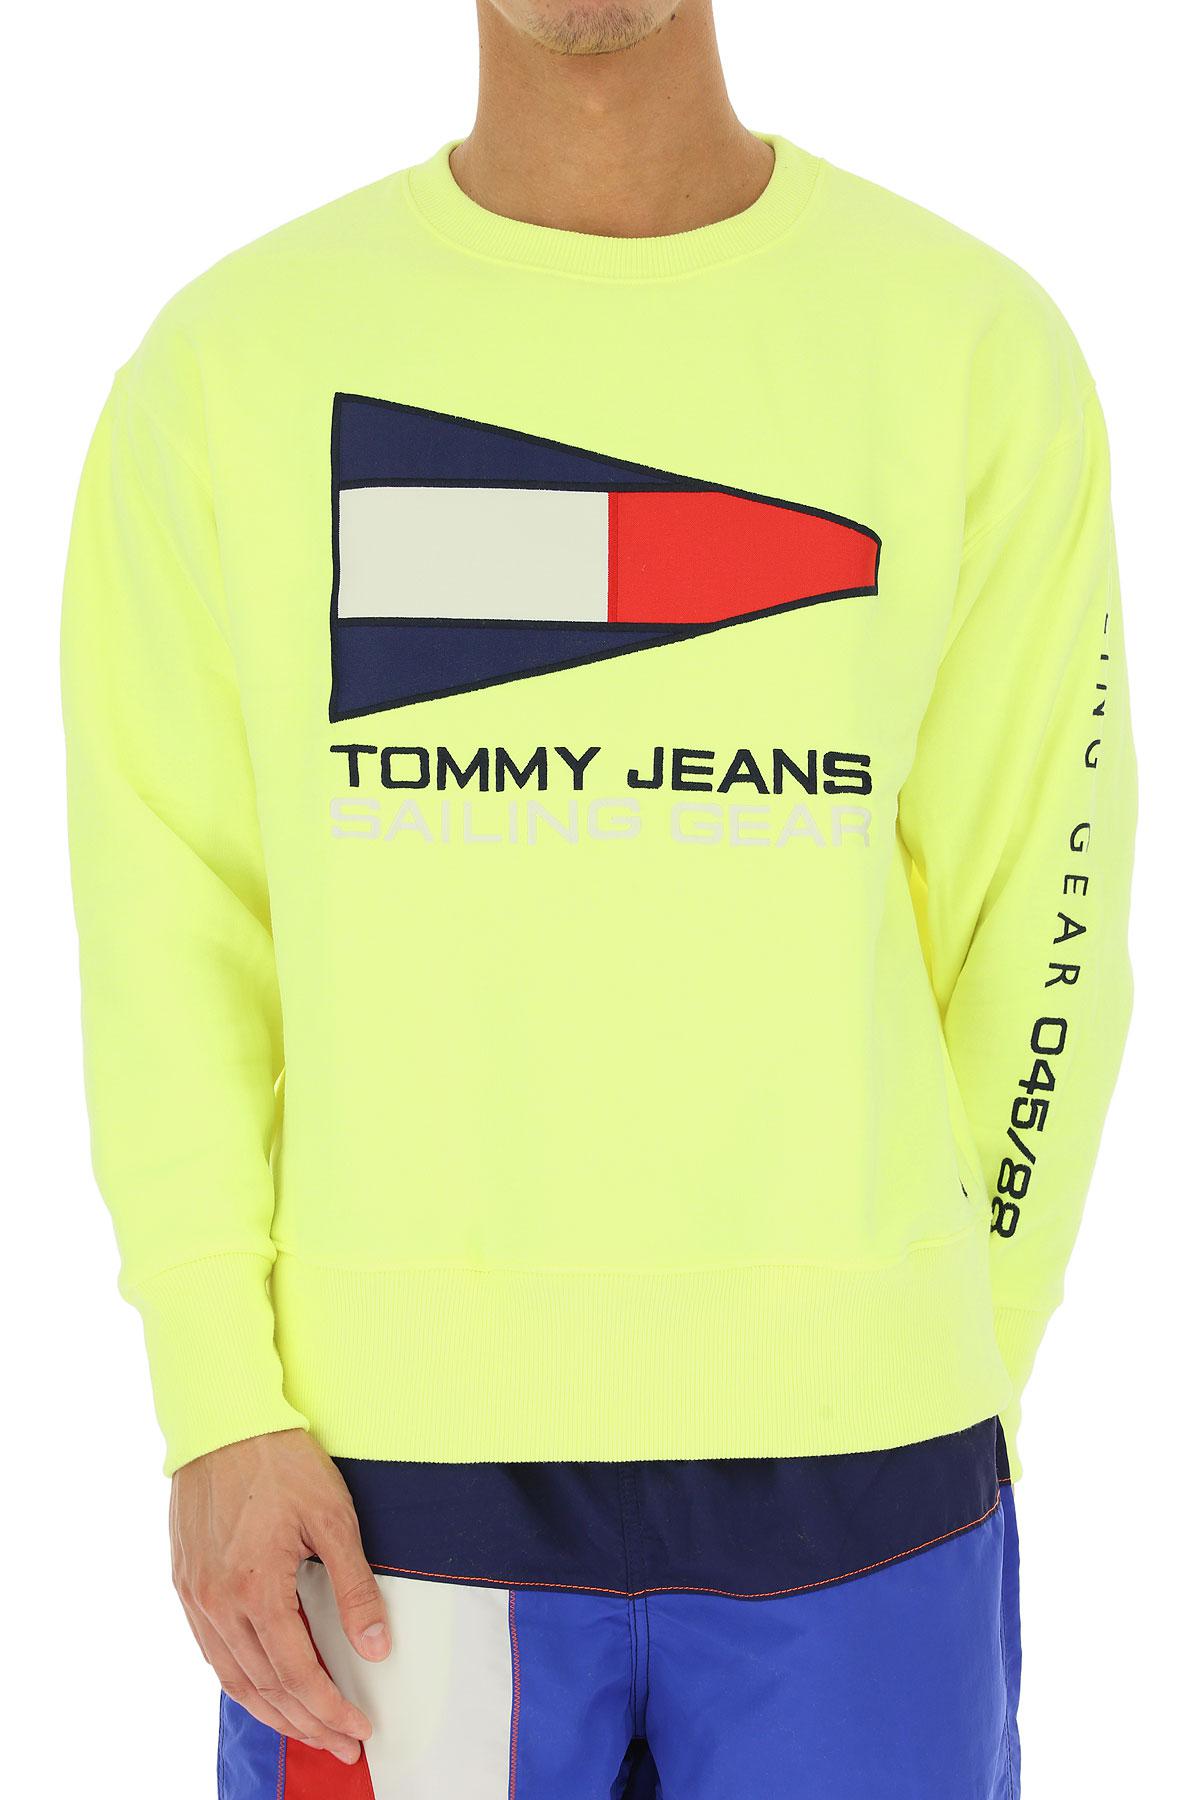 tommy jeans yellow sweatshirt